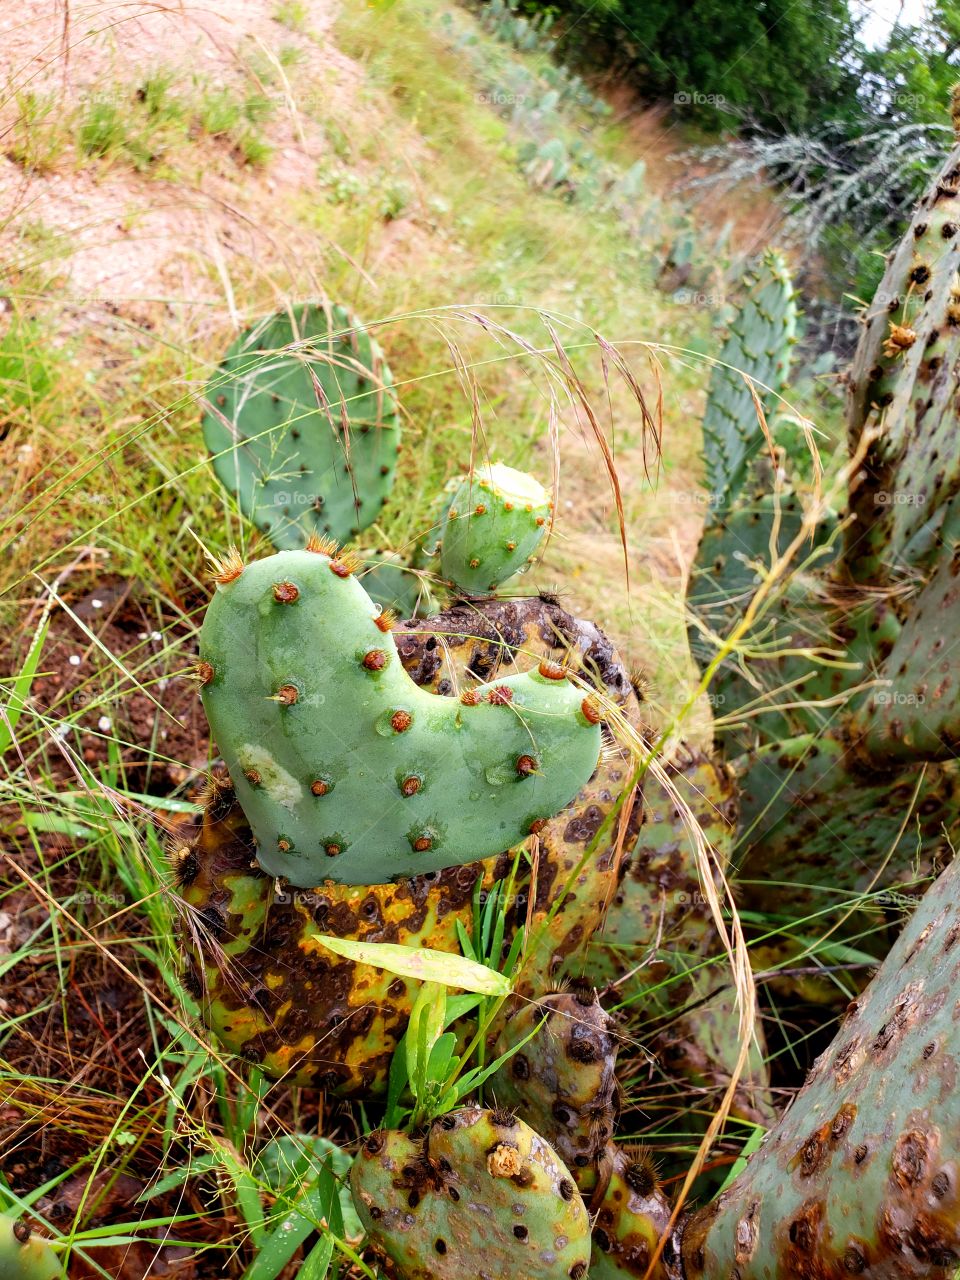 Heart Shaped Cactus